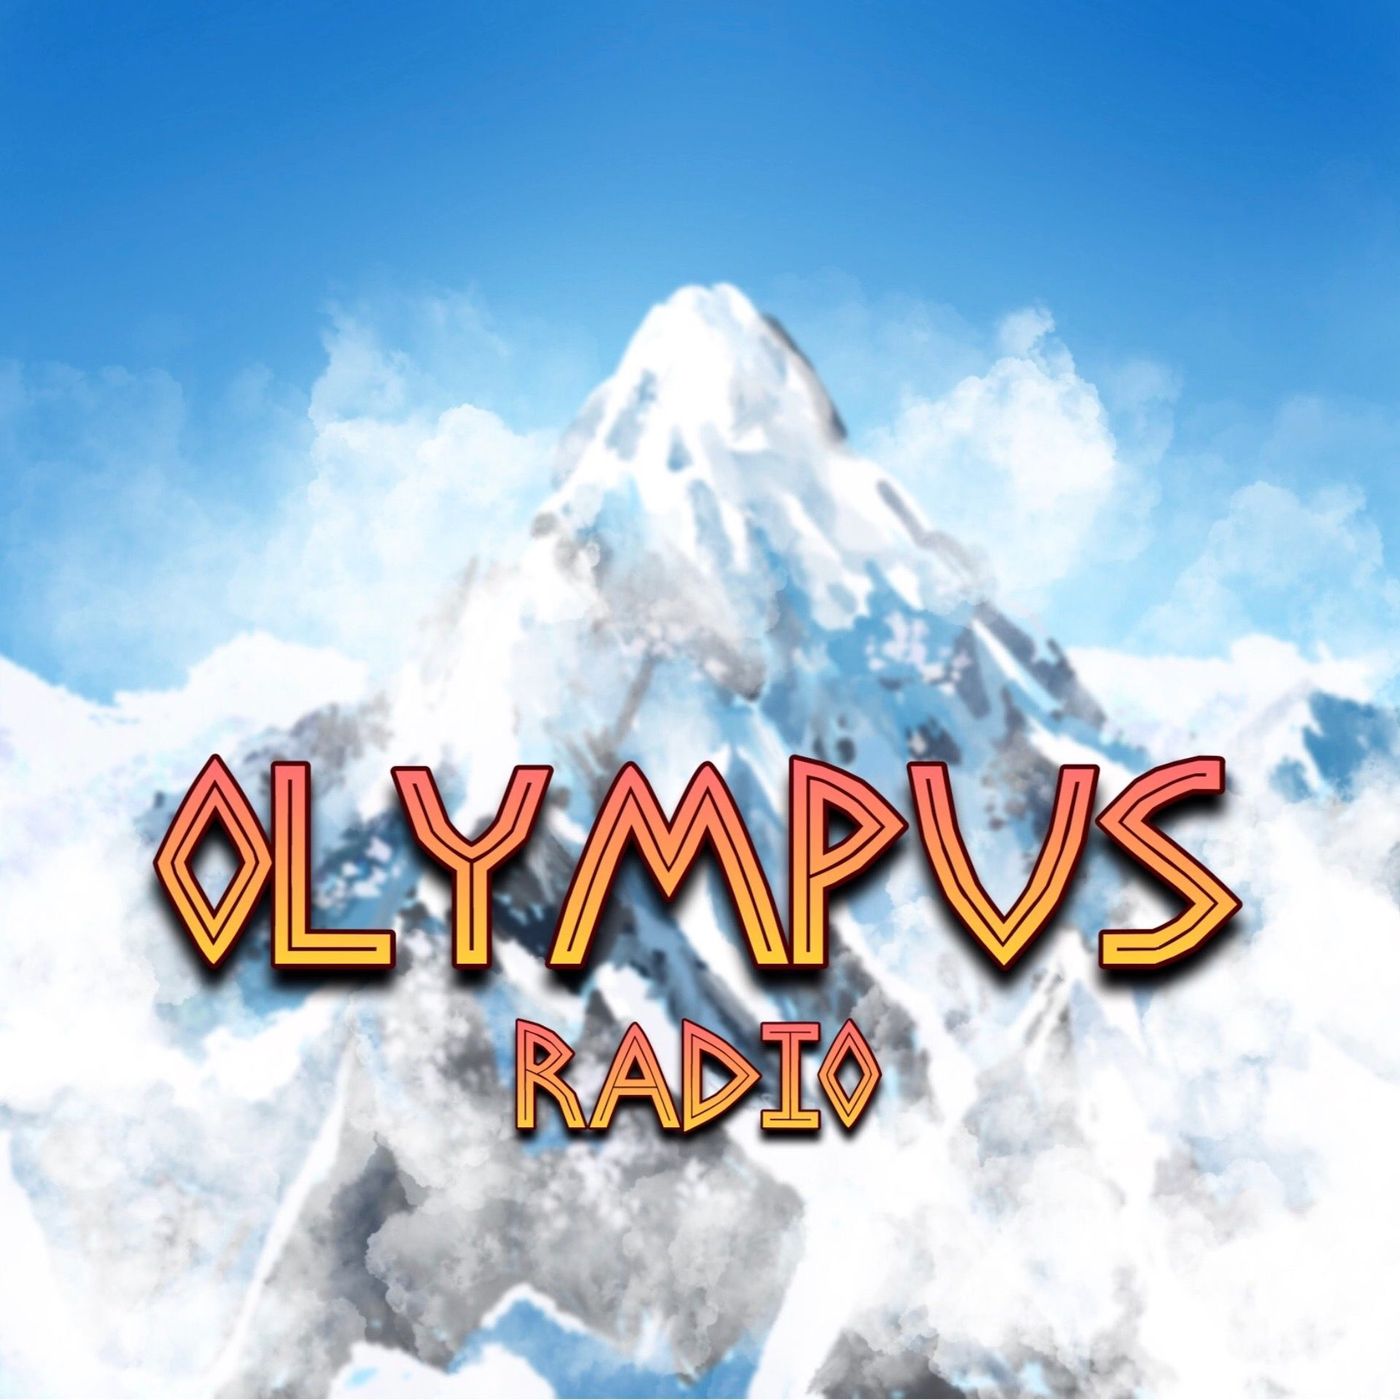 Olympus Radio